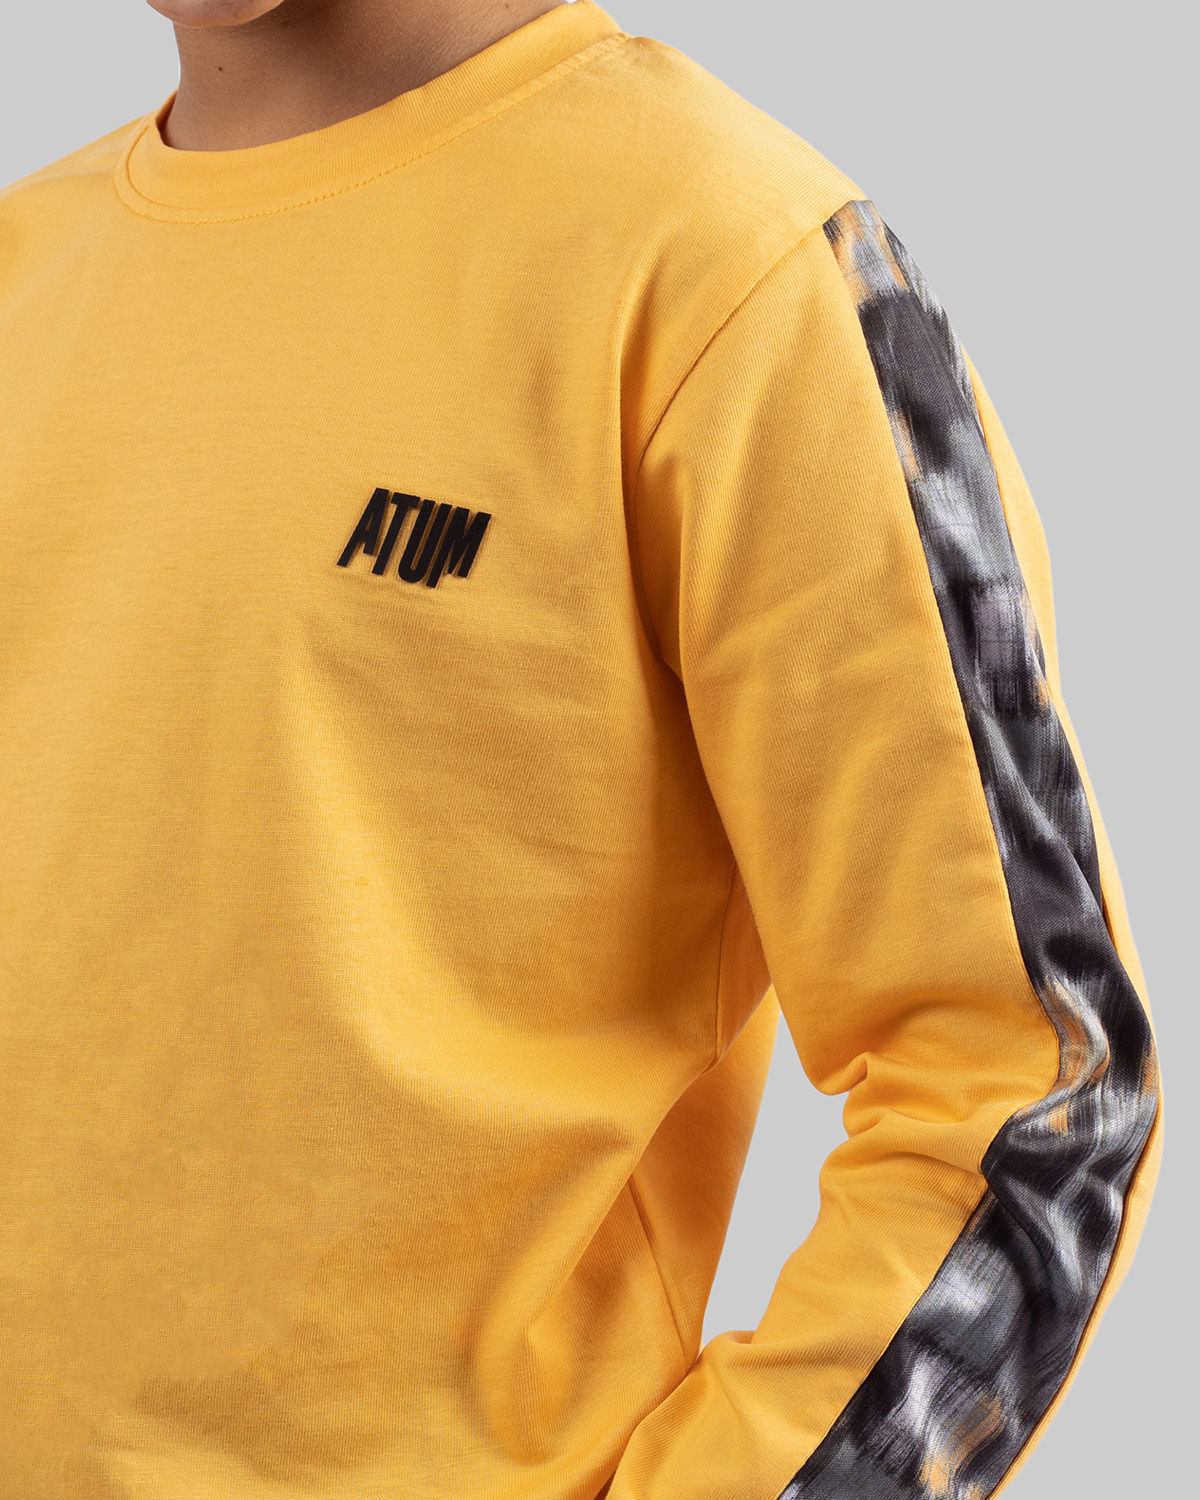 Atum boy's longsleeves t-shirt - Atum Egypt #